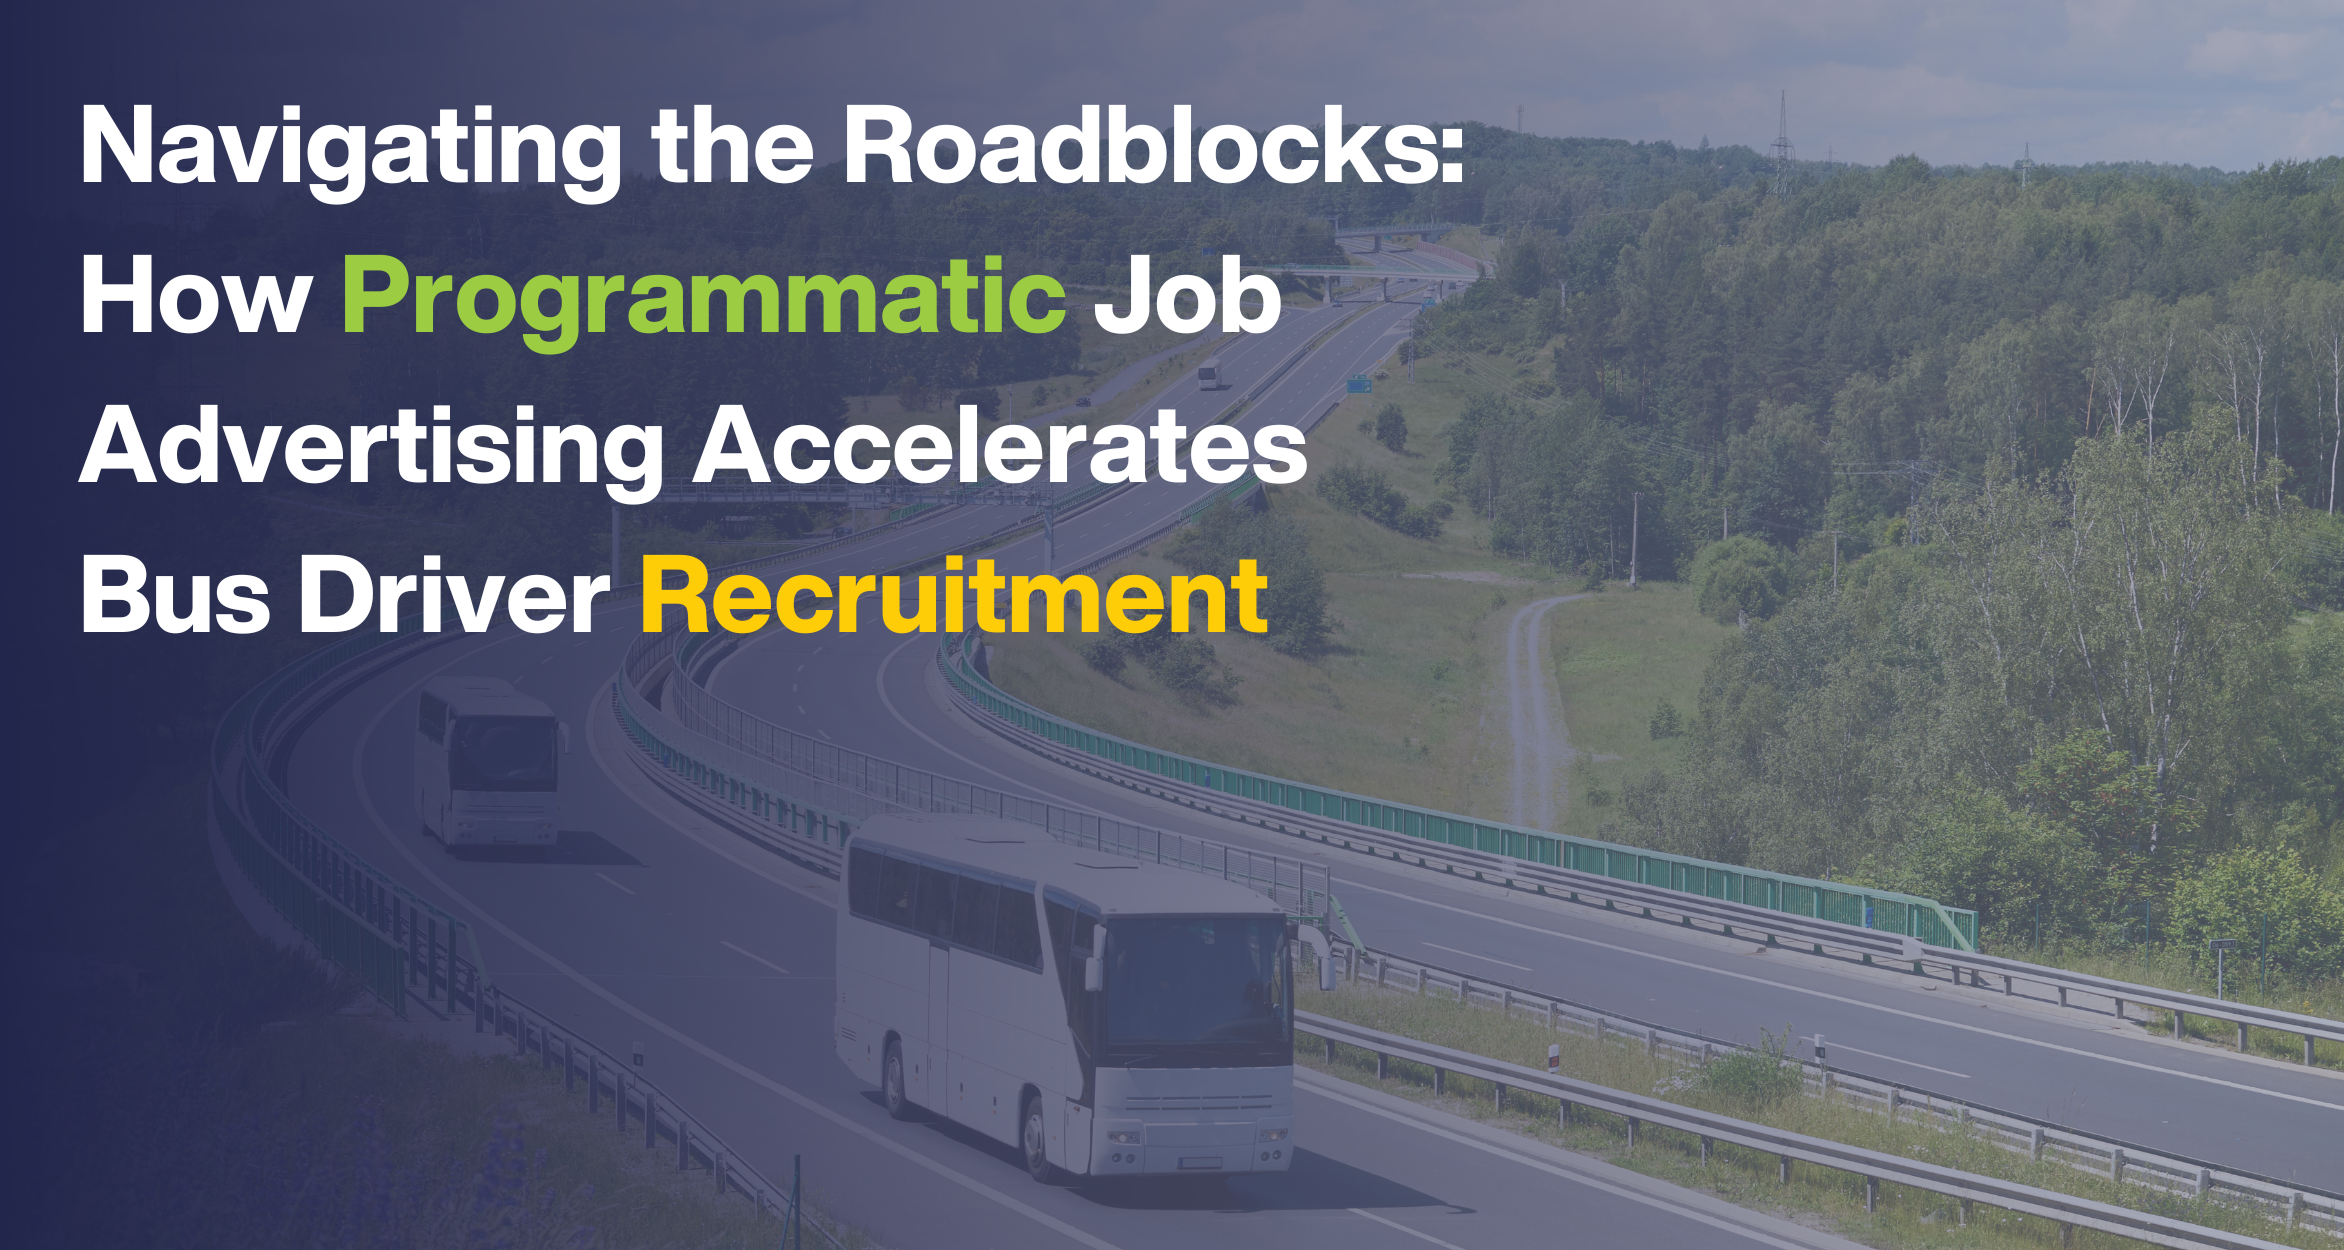 Bus driver recruitment: Programmatic job advertising driving success